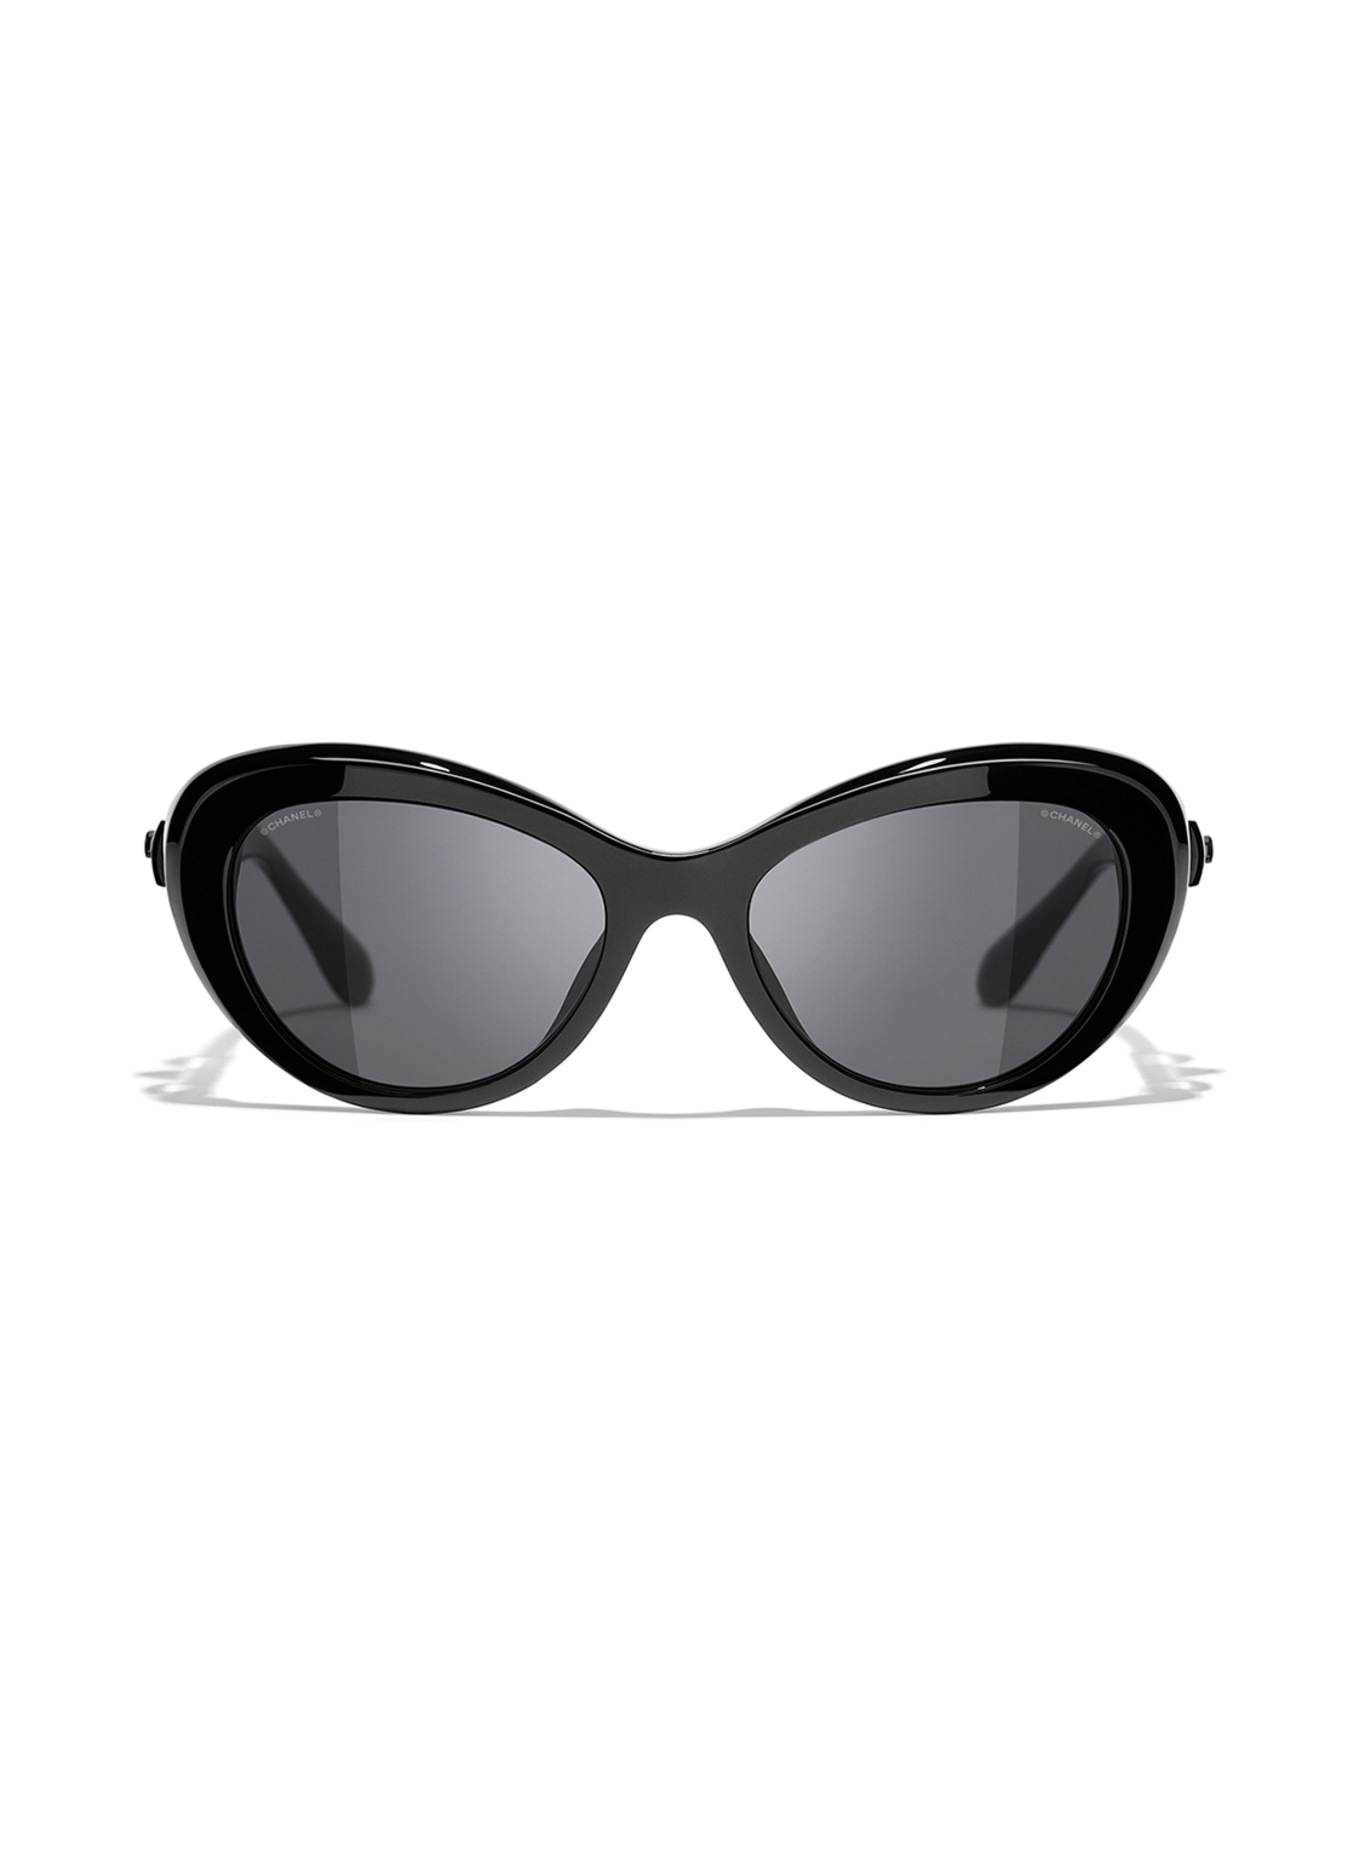 chanel eye cat sunglasses